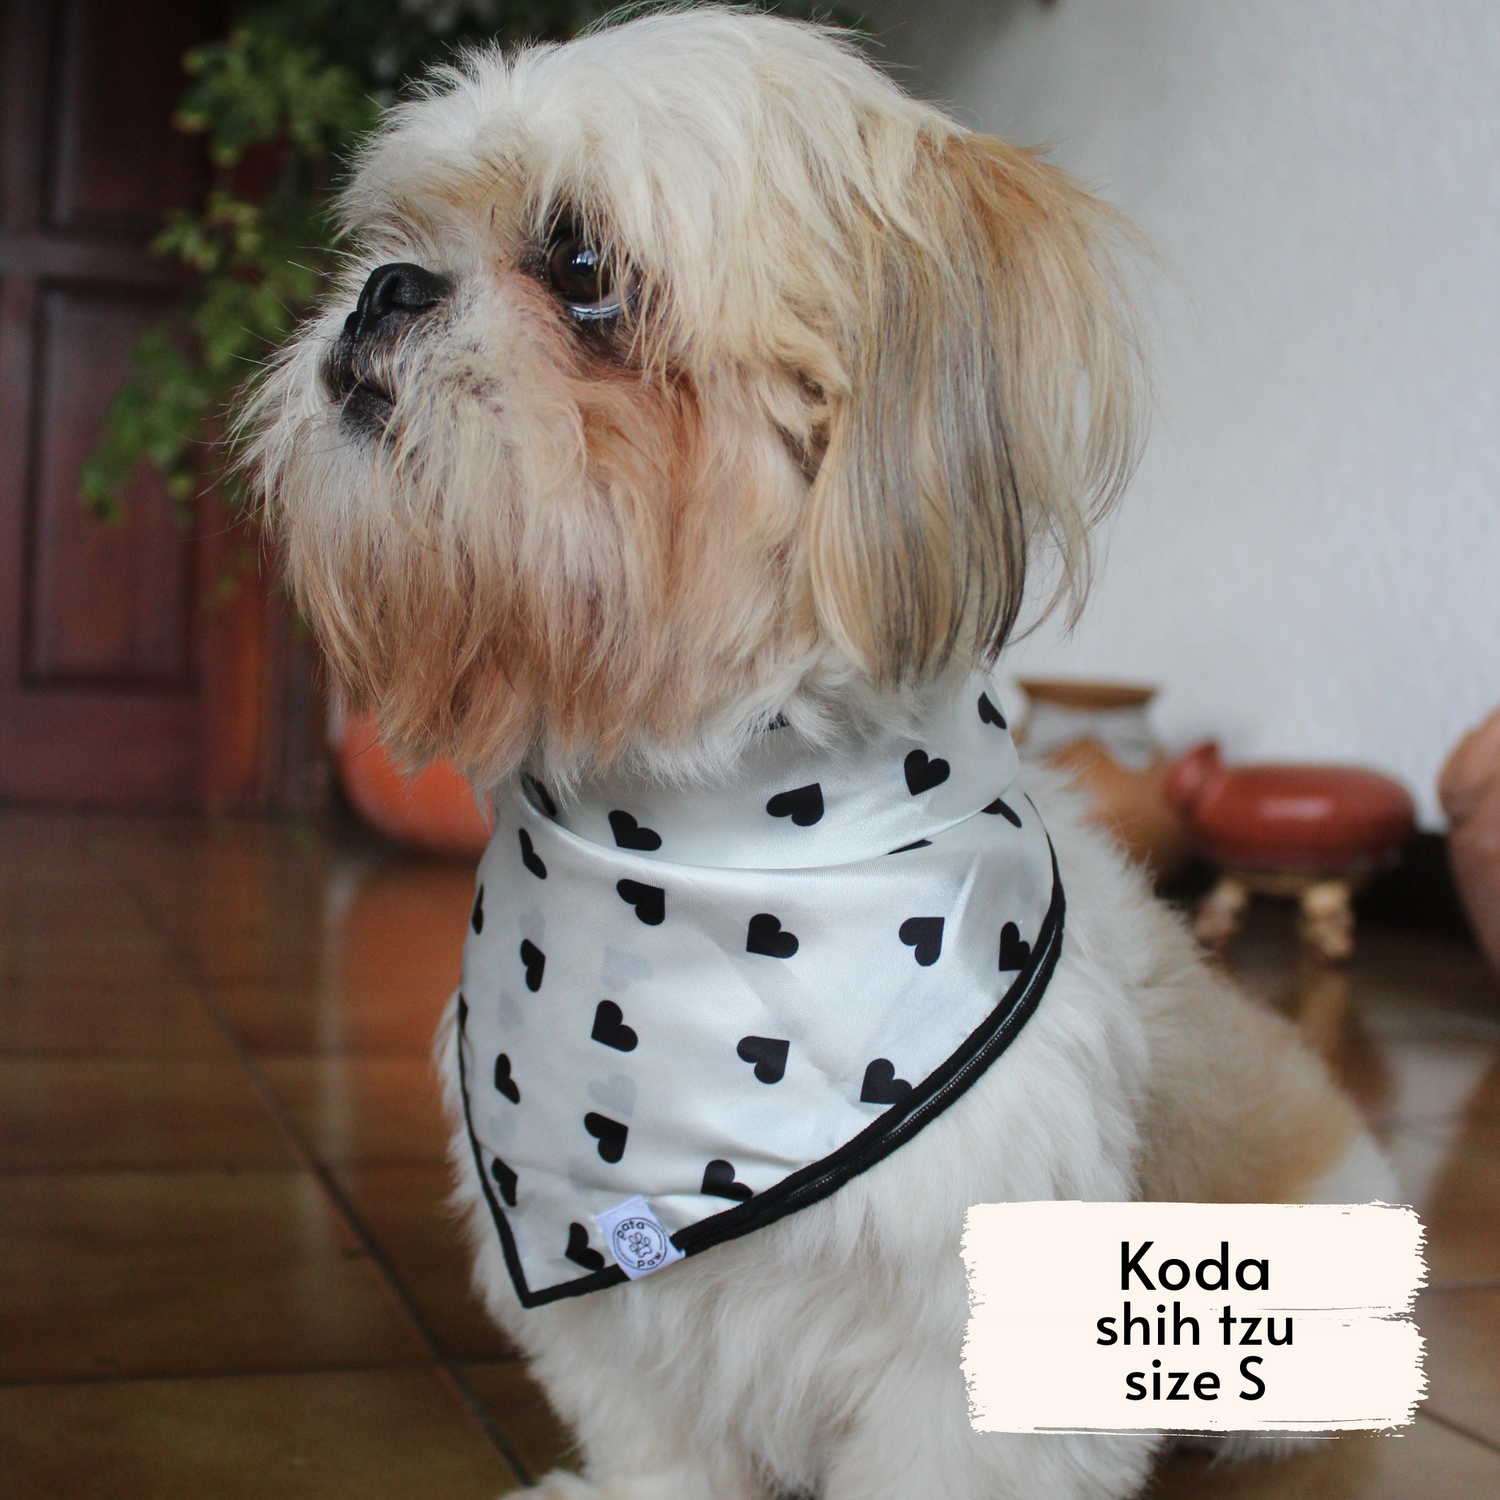 Pata Paw classic hearts bandana as seen on a small dog, Koda, a shih tzu.